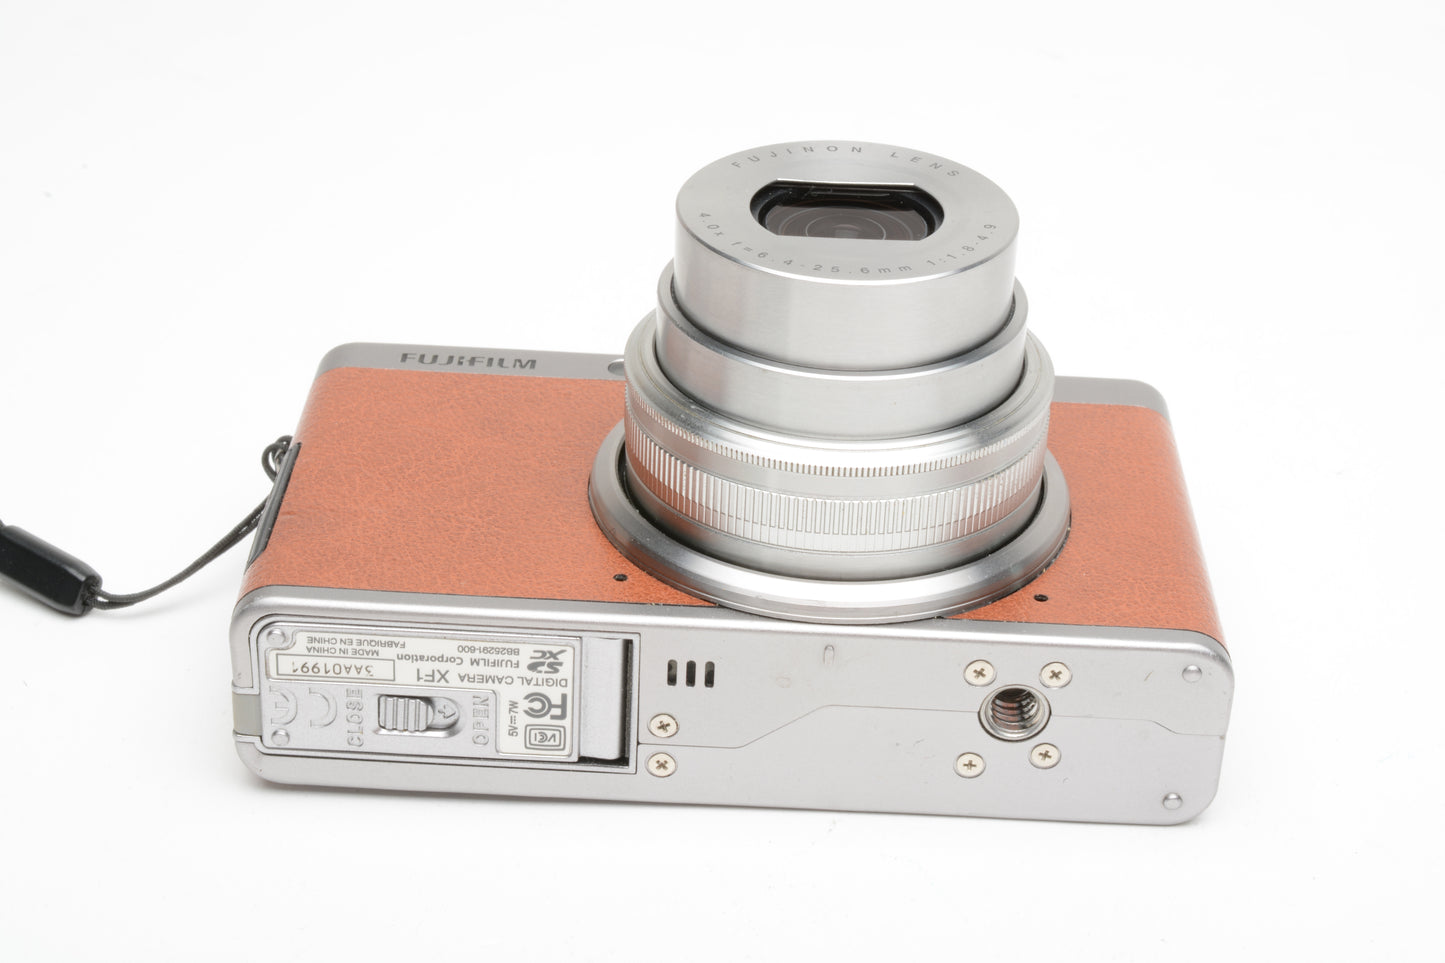 Fujifilm XF1 Digital Point&Shoot (Brown / Silver), batt+charger, tested, *Read